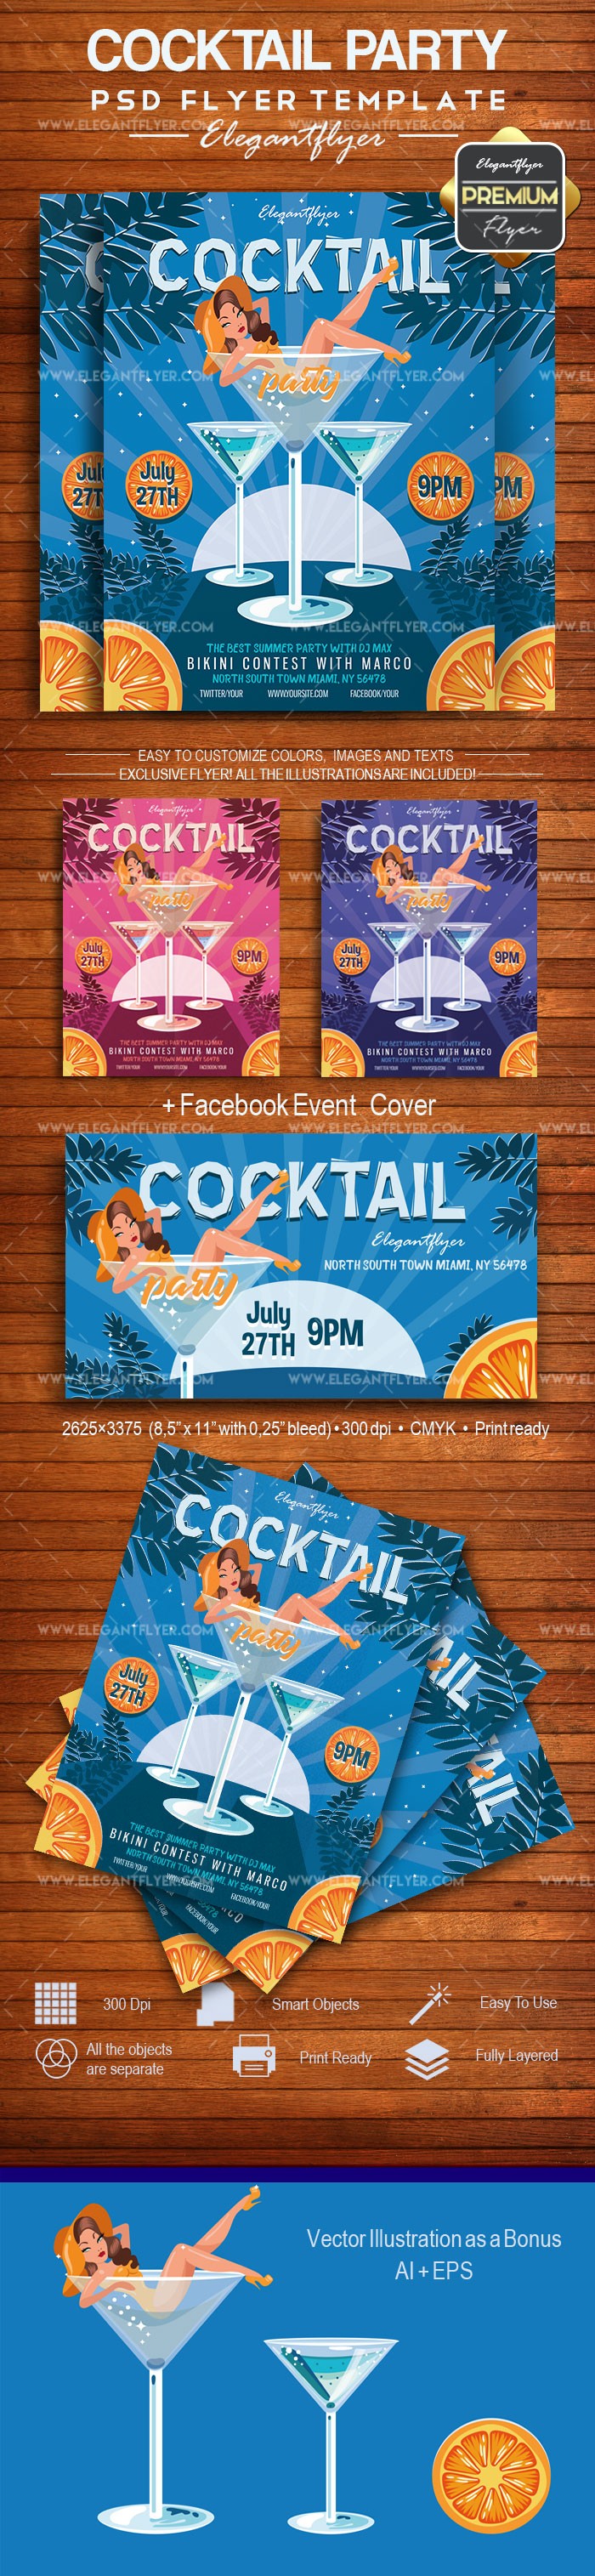 Cocktail Party by ElegantFlyer